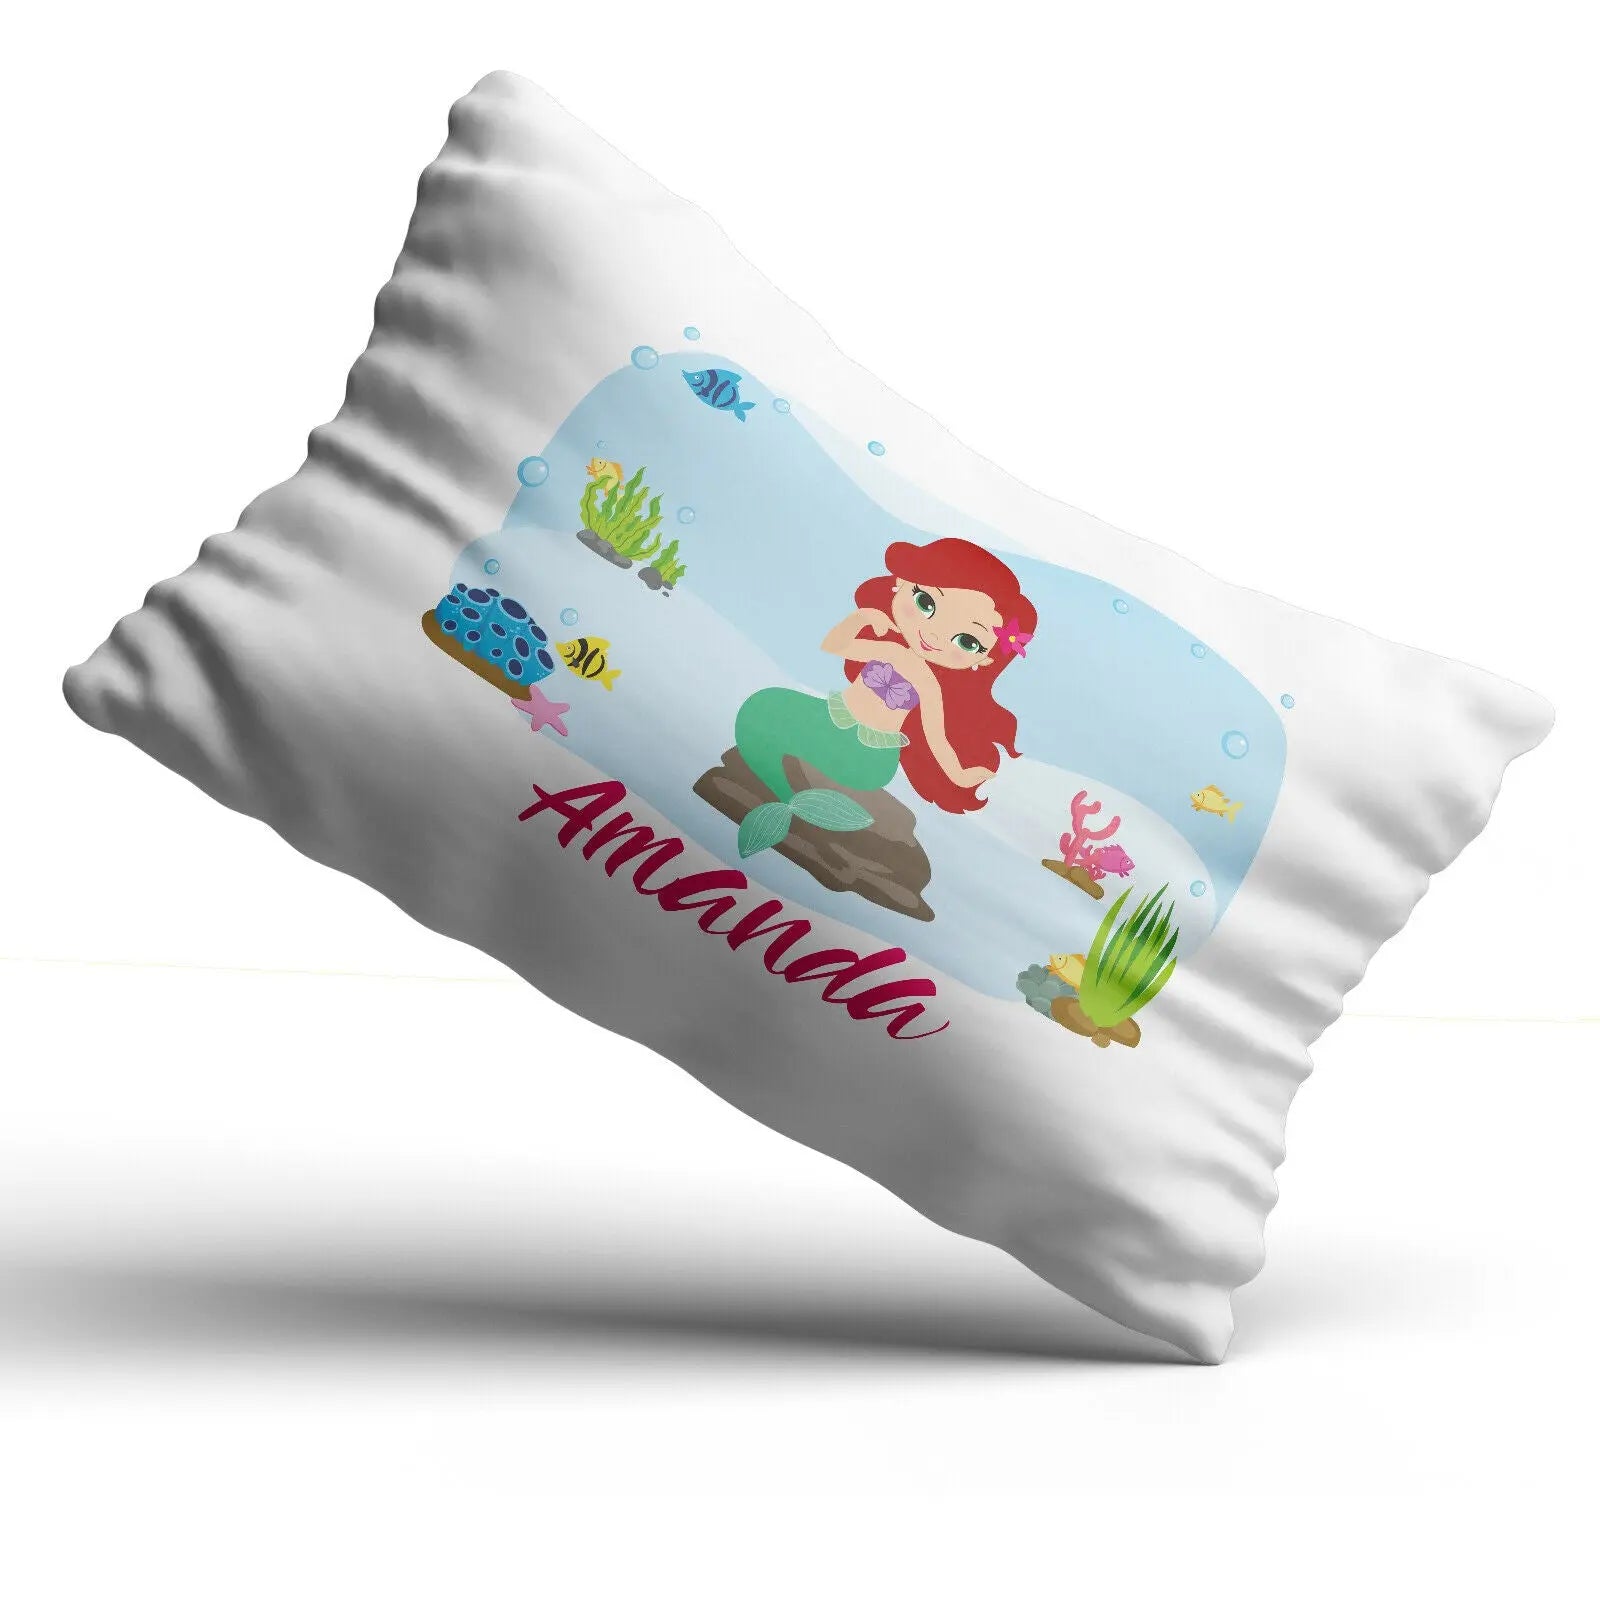 Personalised Mermaid Pillow Case Printed Gift Children Custom Print - Red Head